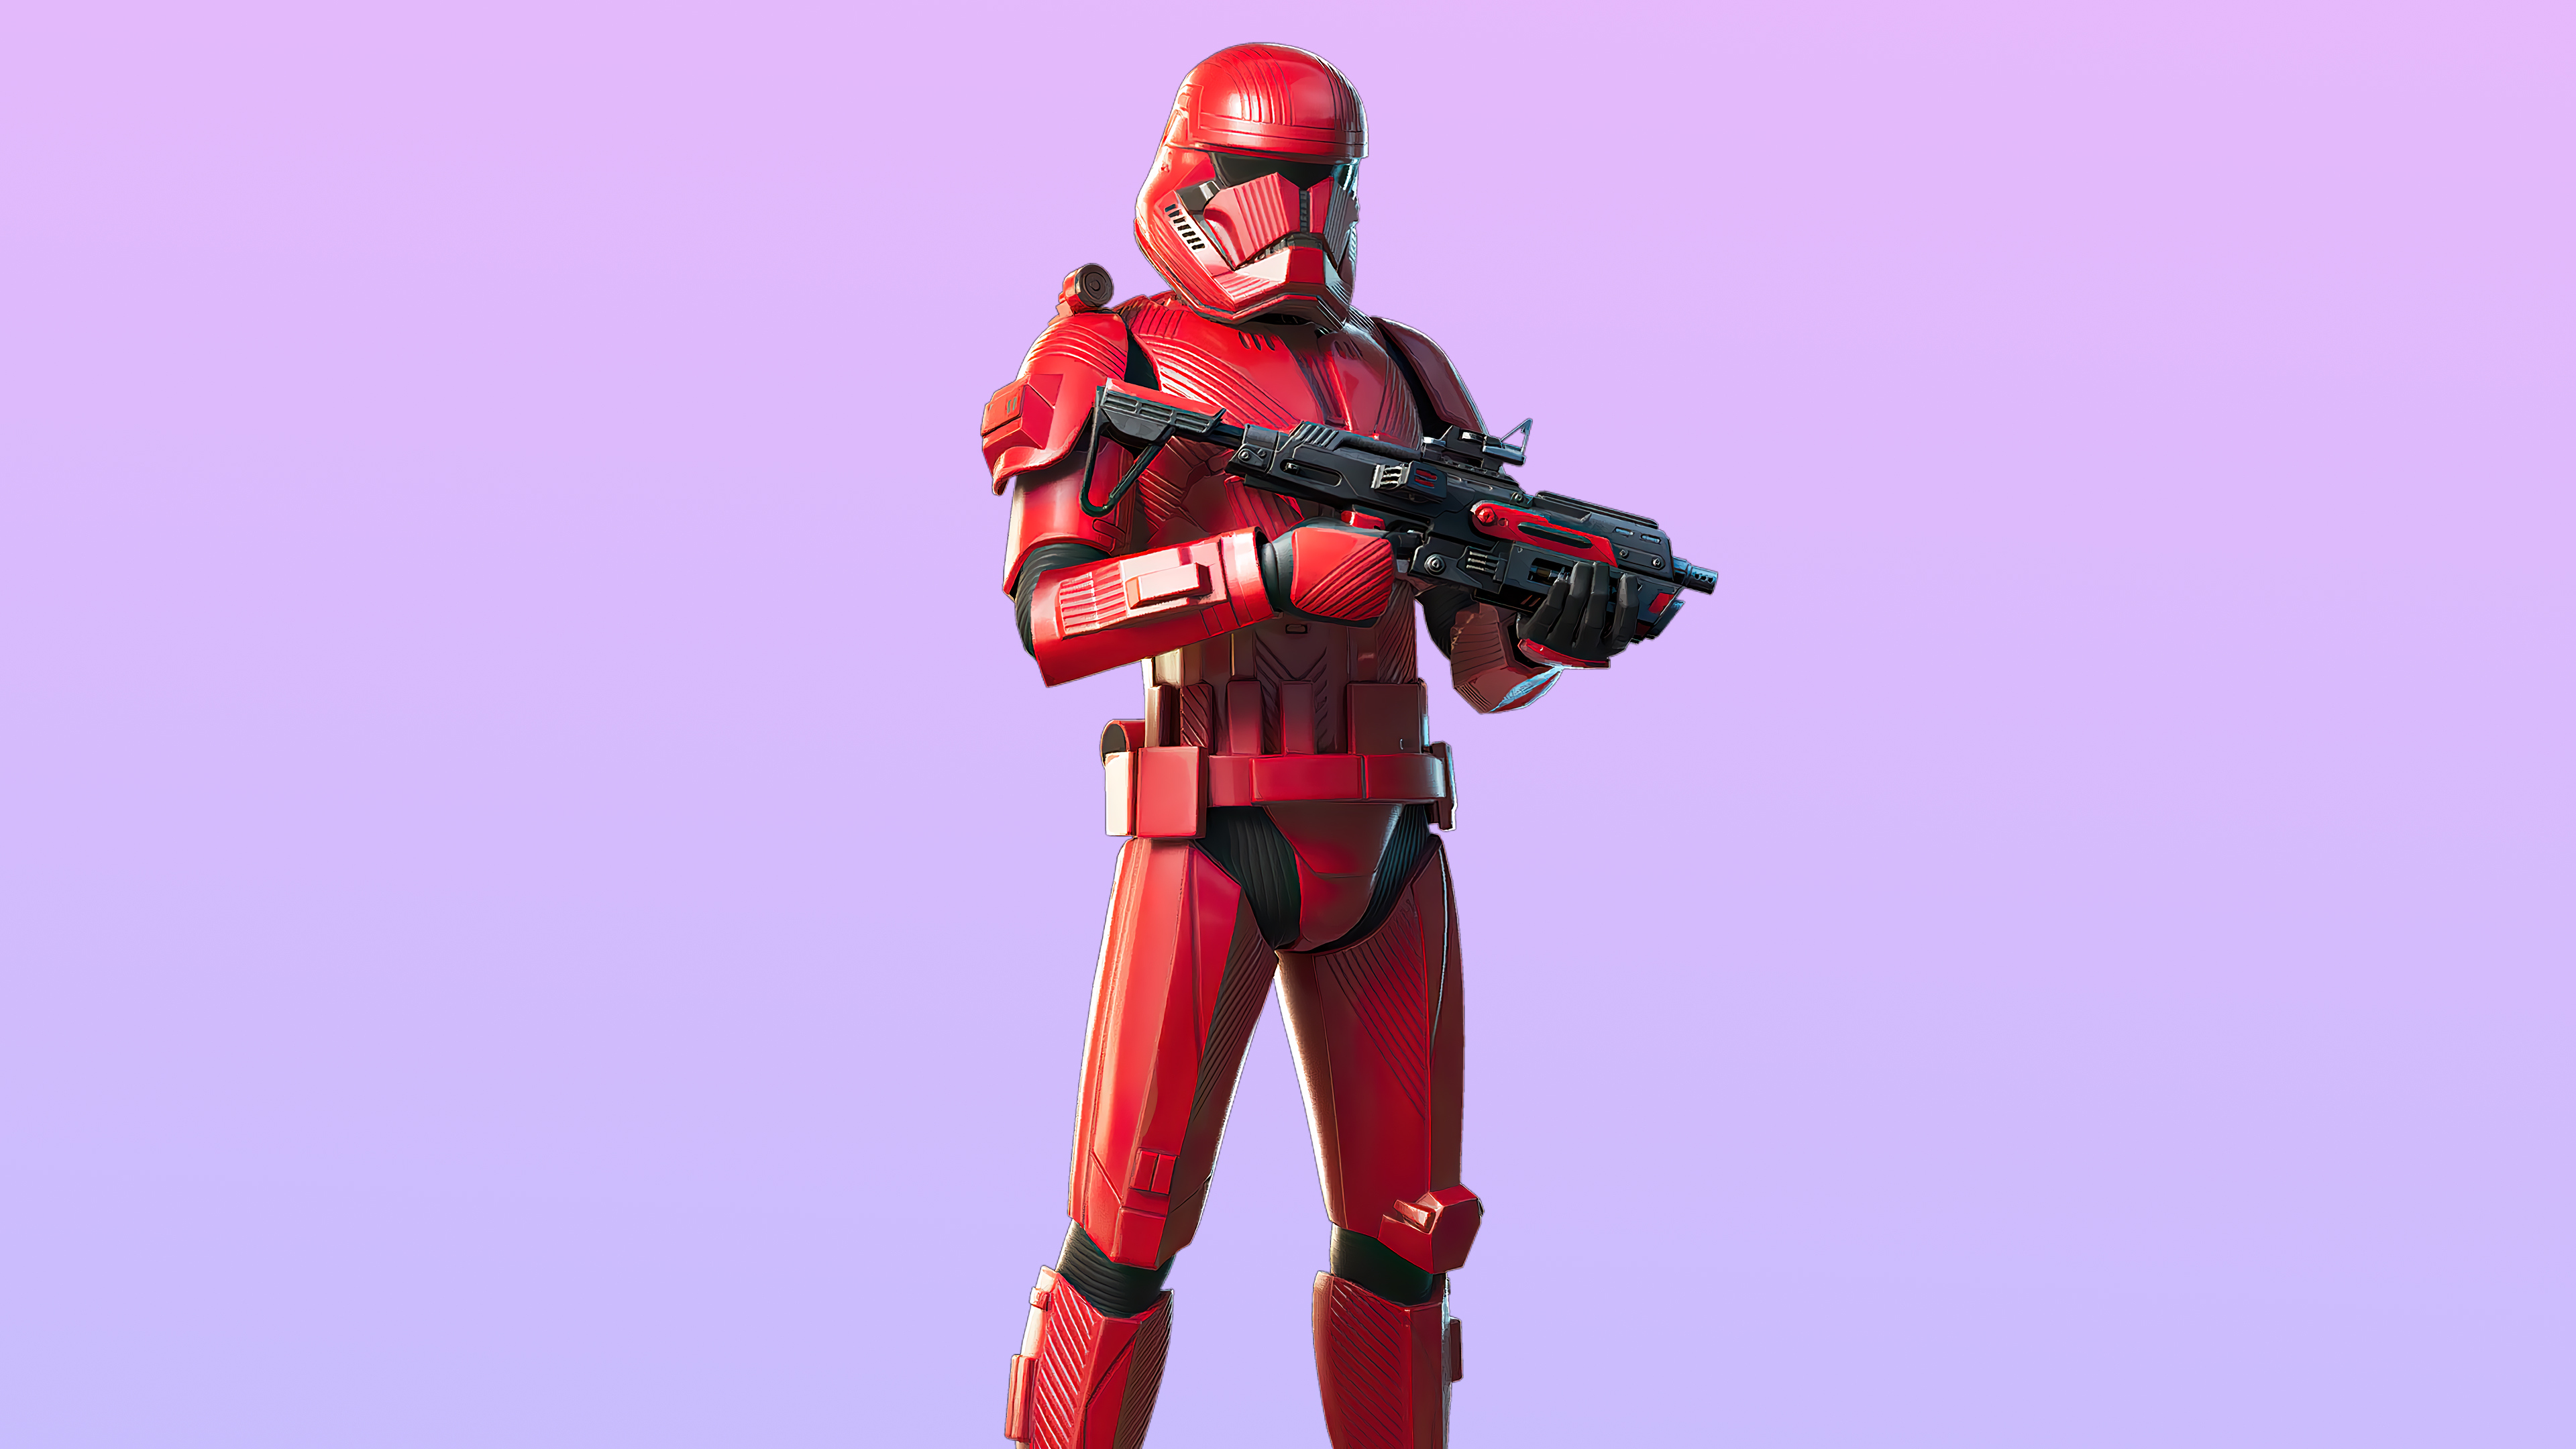 Sith Trooper Fortnite Wallpaper, HD Games 4K Wallpaper